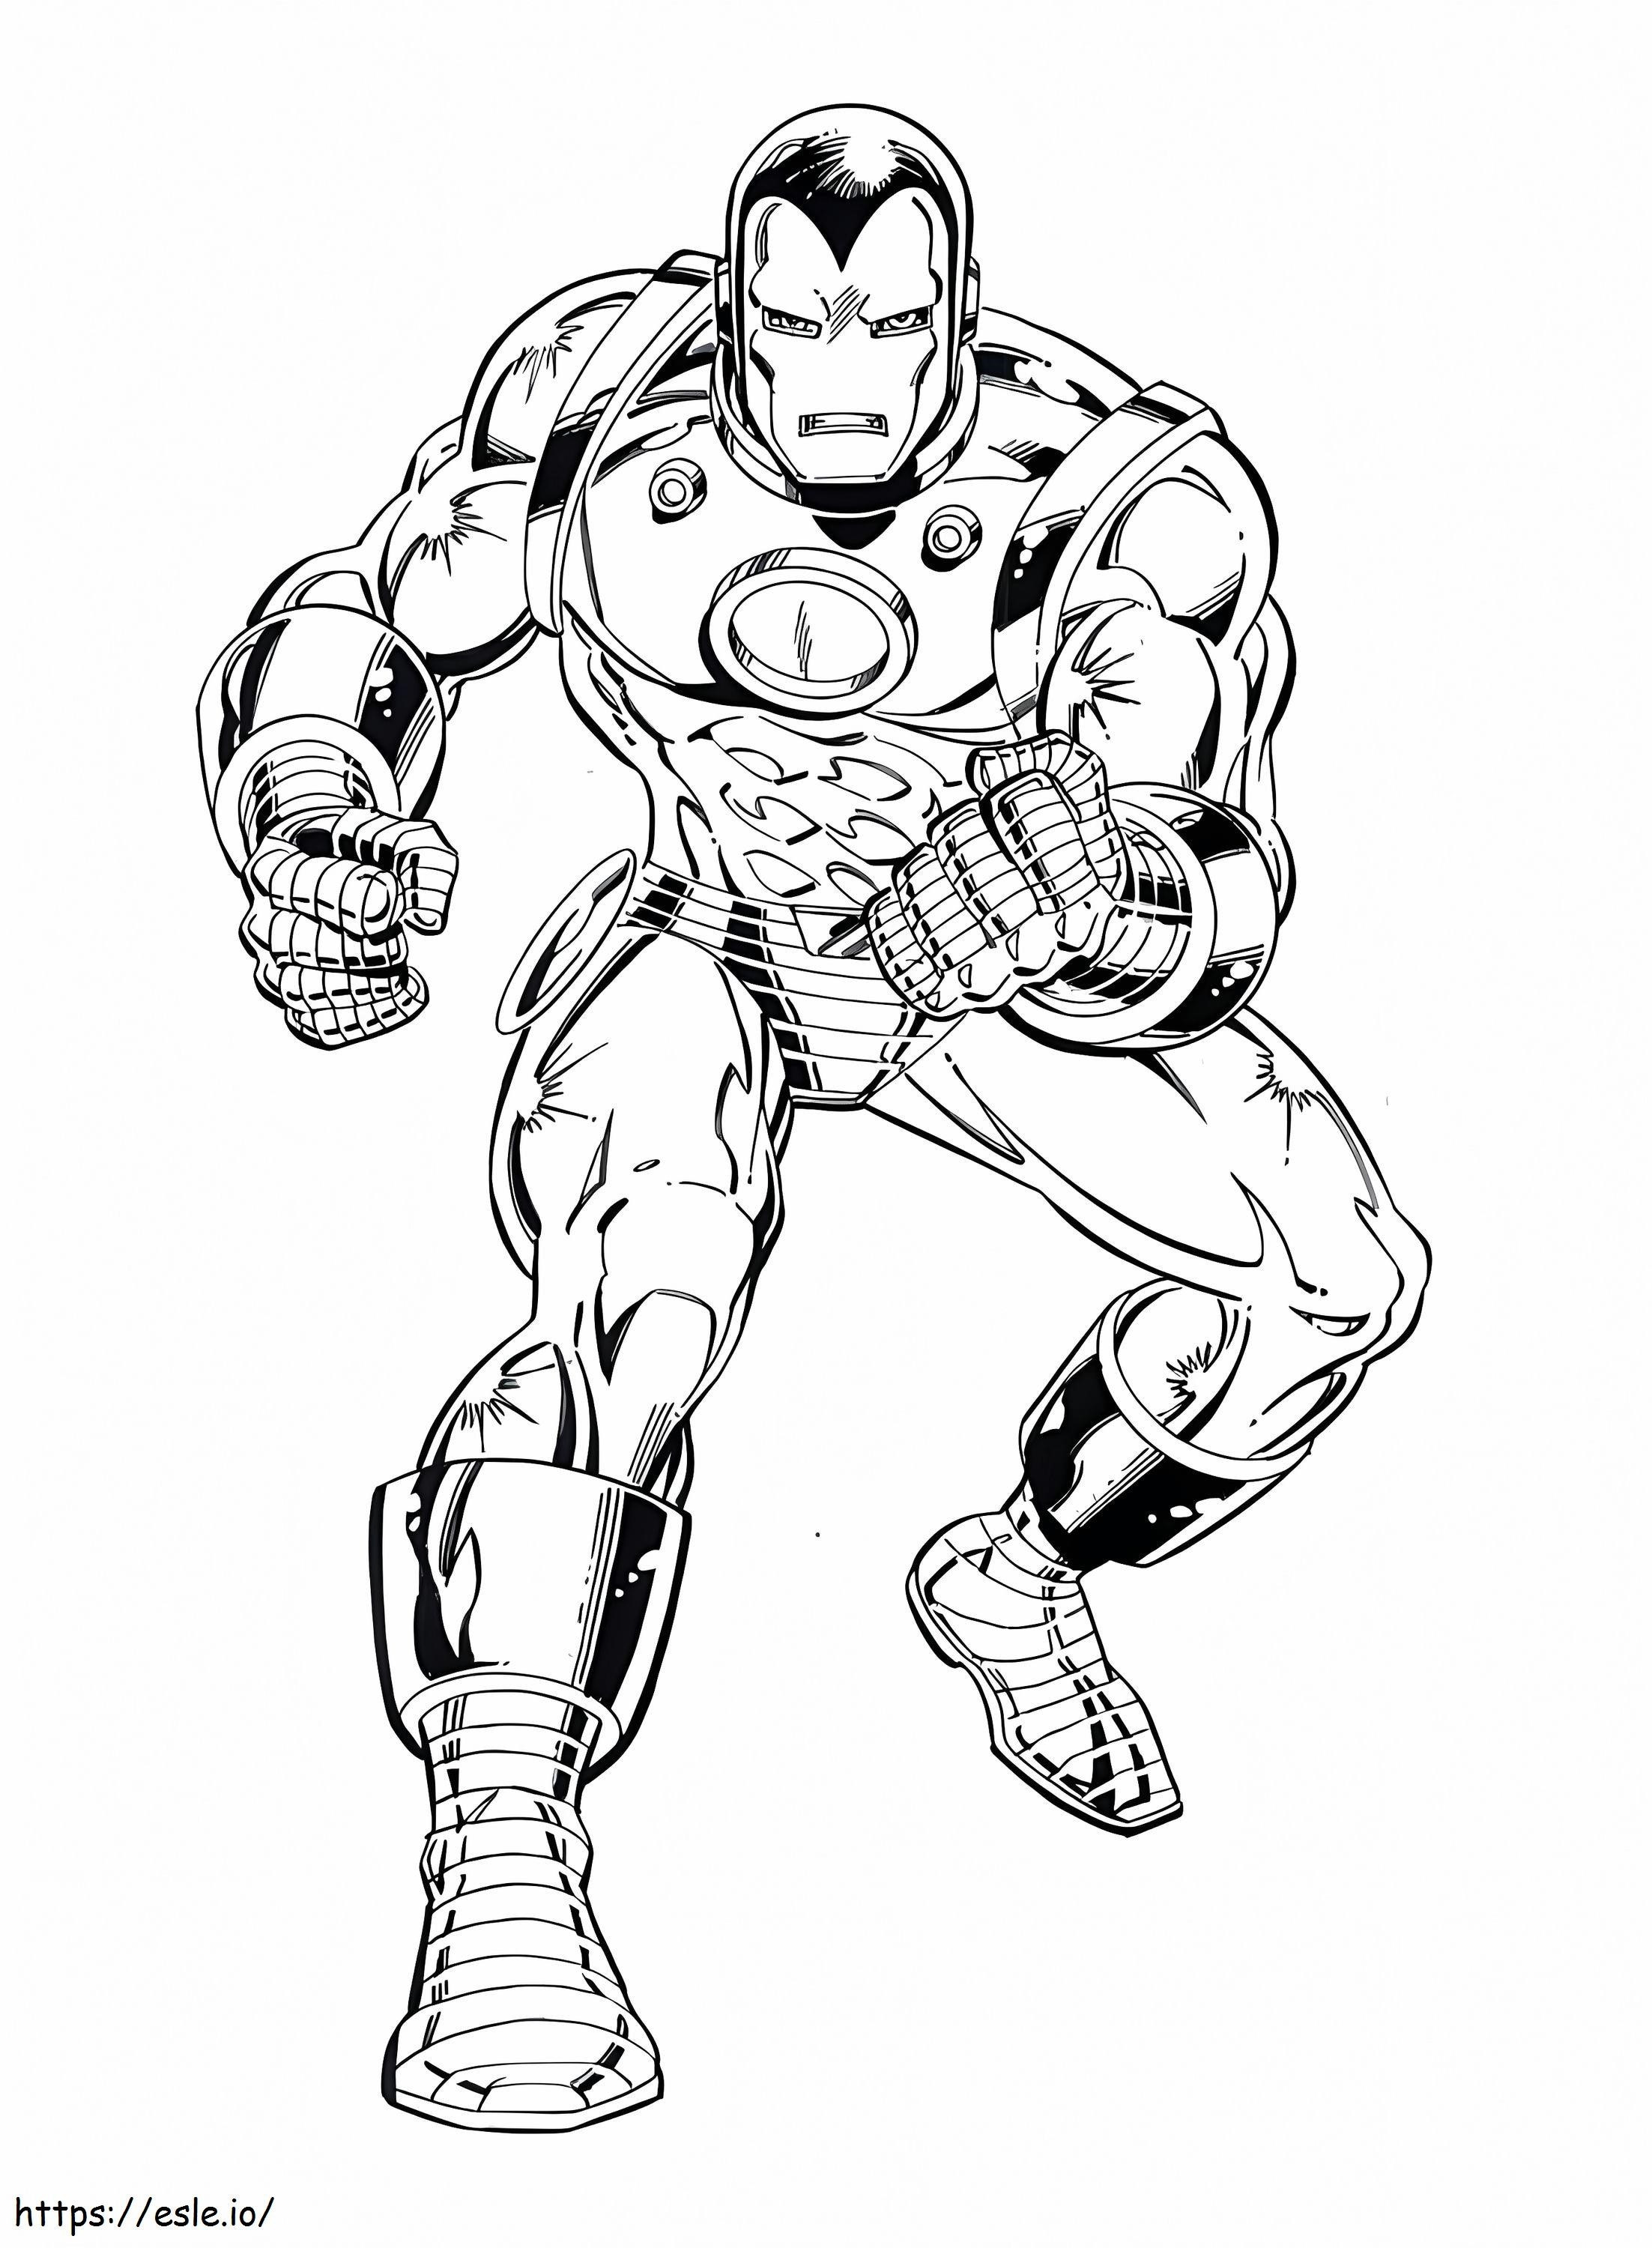 Cartoon Iron Man coloring page